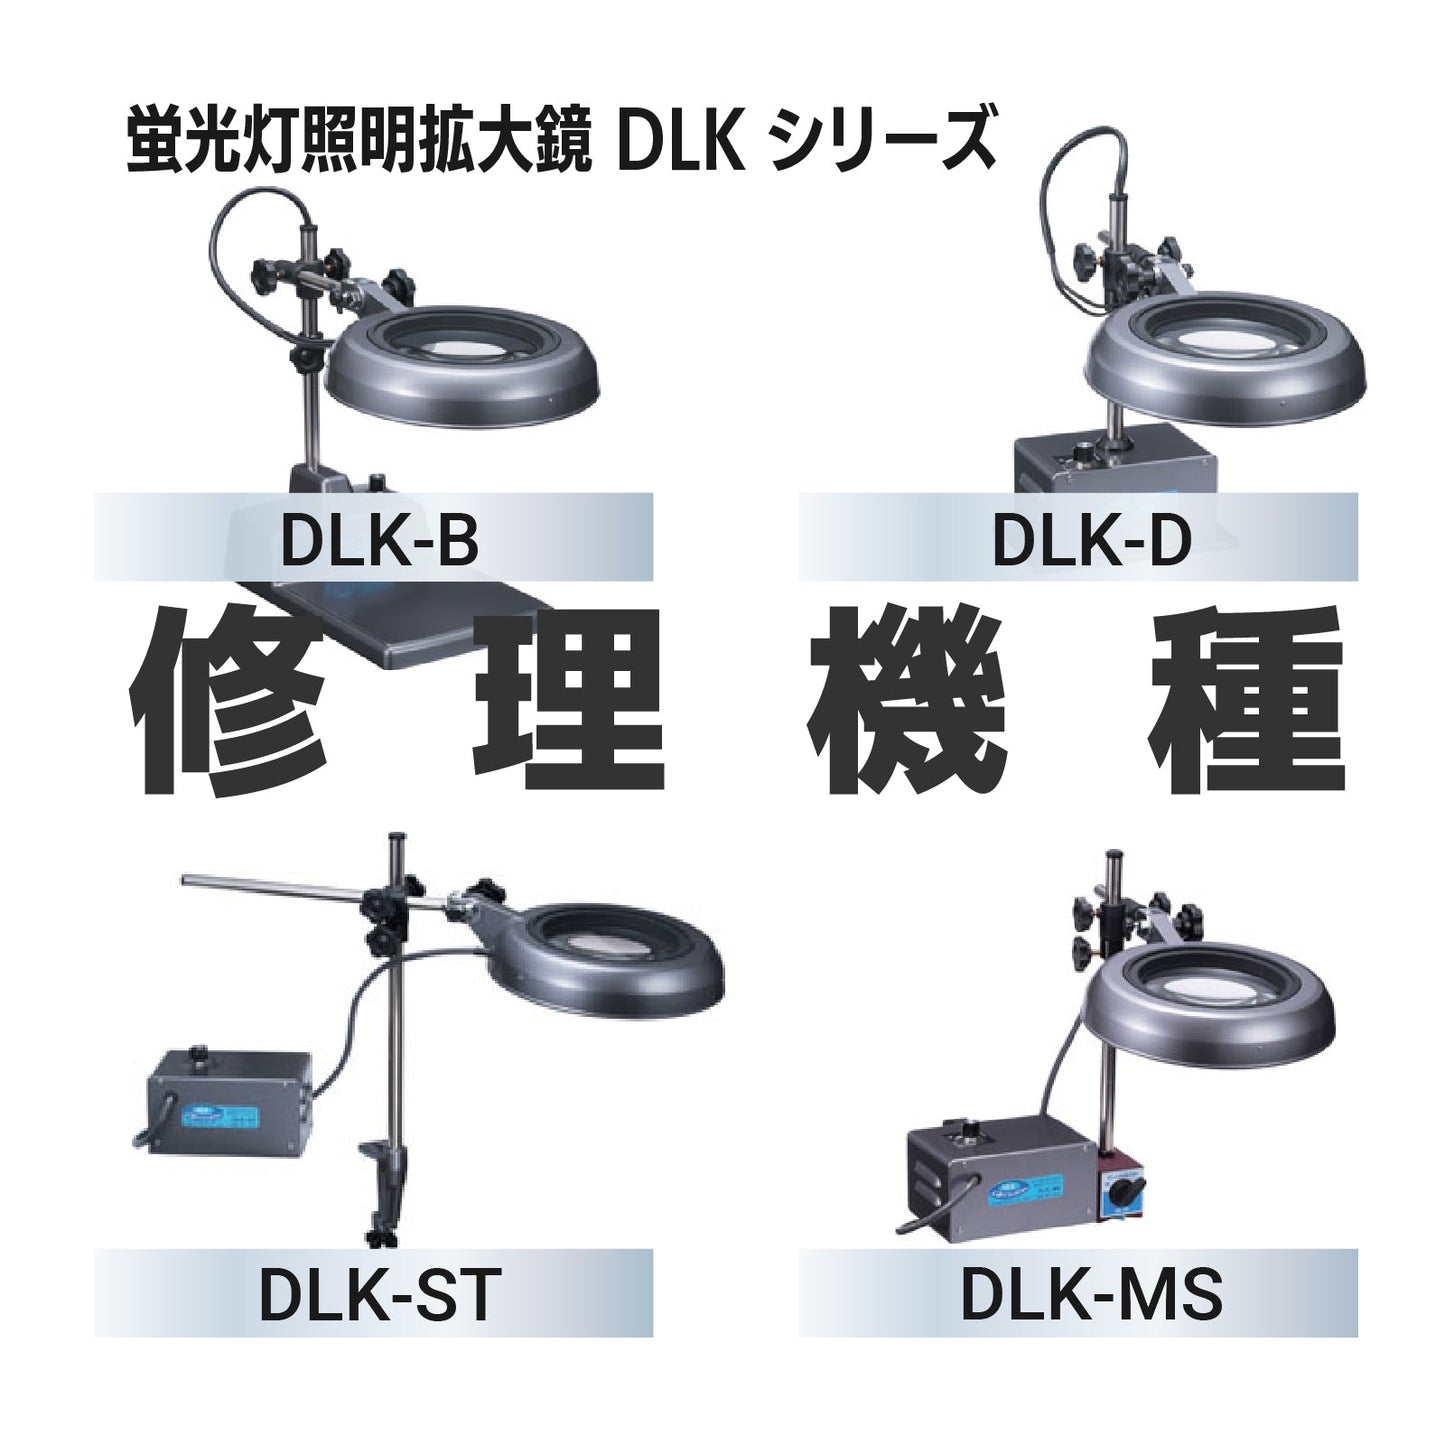 DLK series: DLK-B,D,ST,MS